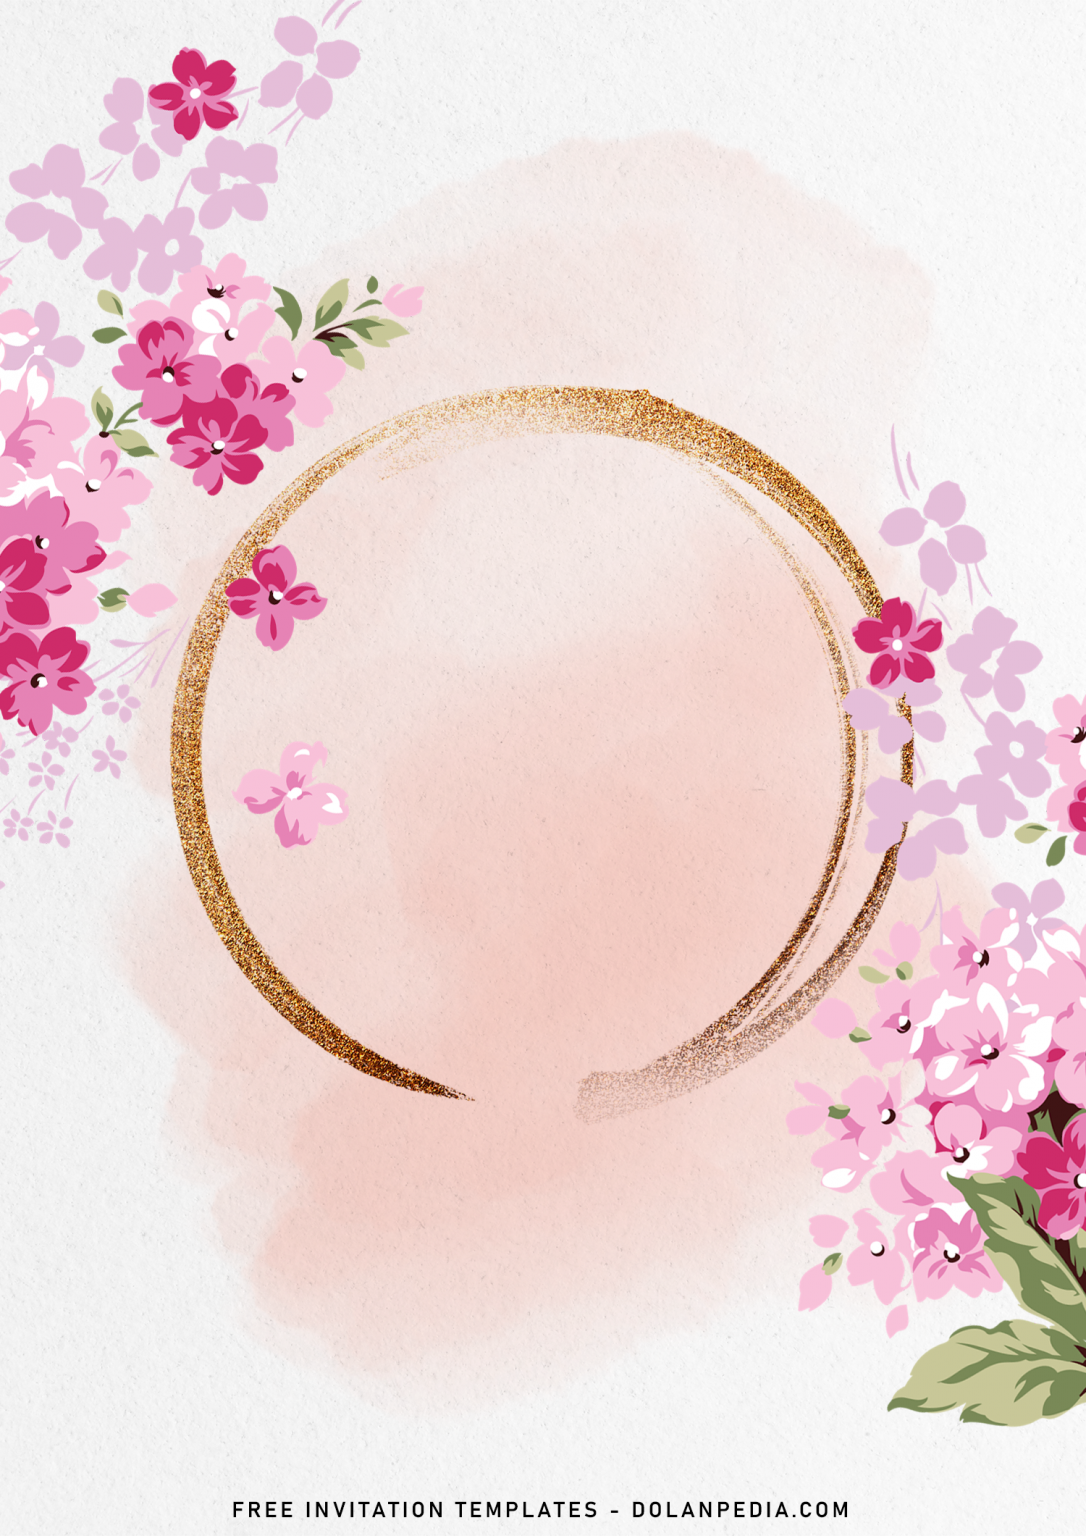 8+ Stunning Blush Pink And Gold Wedding Invitation Templates | Dolanpedia